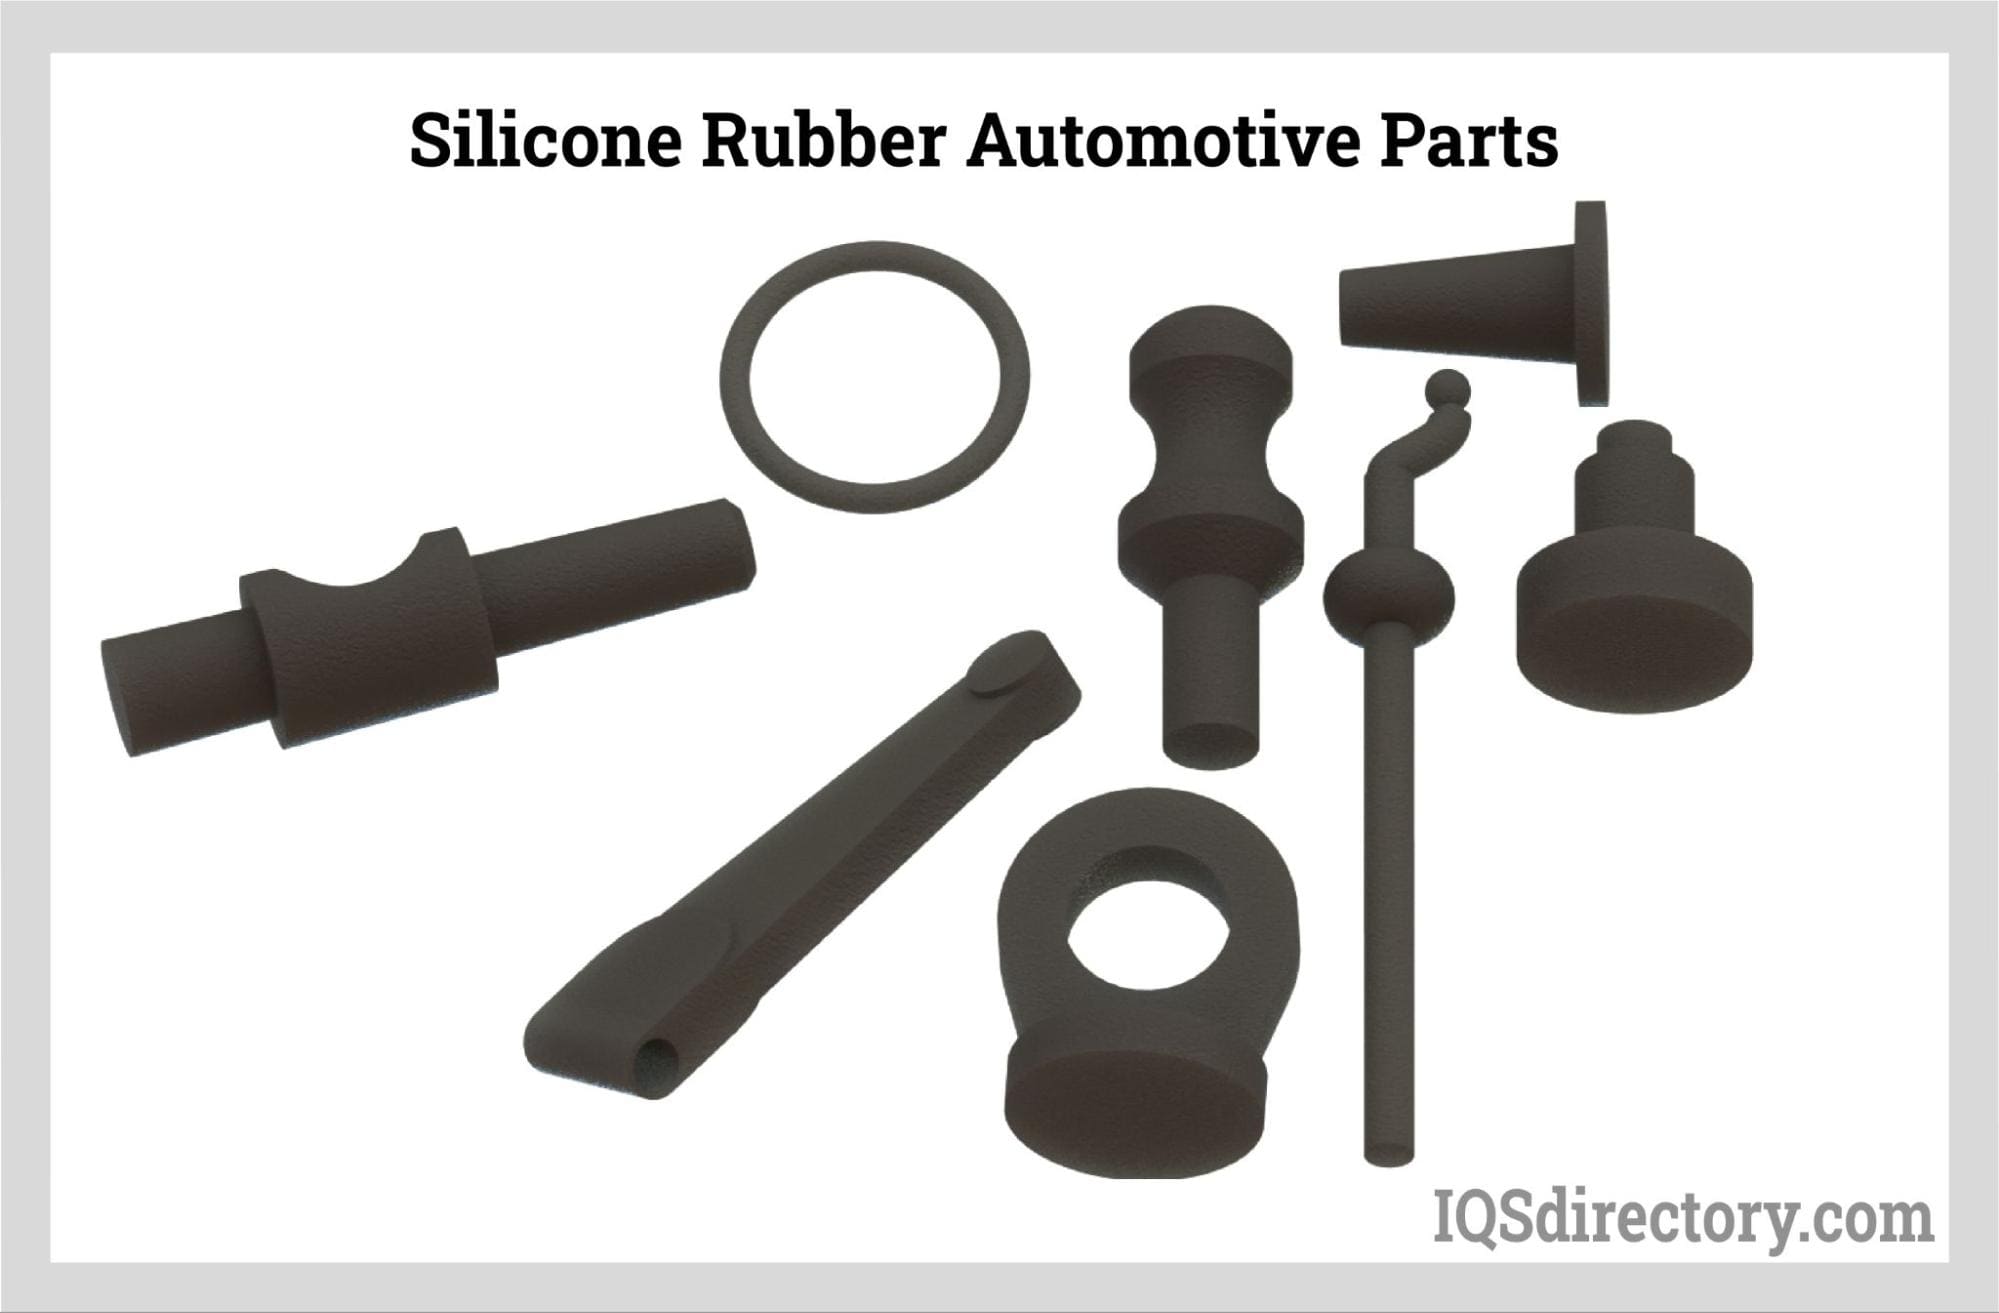 Silicone Rubber Automotive Parts